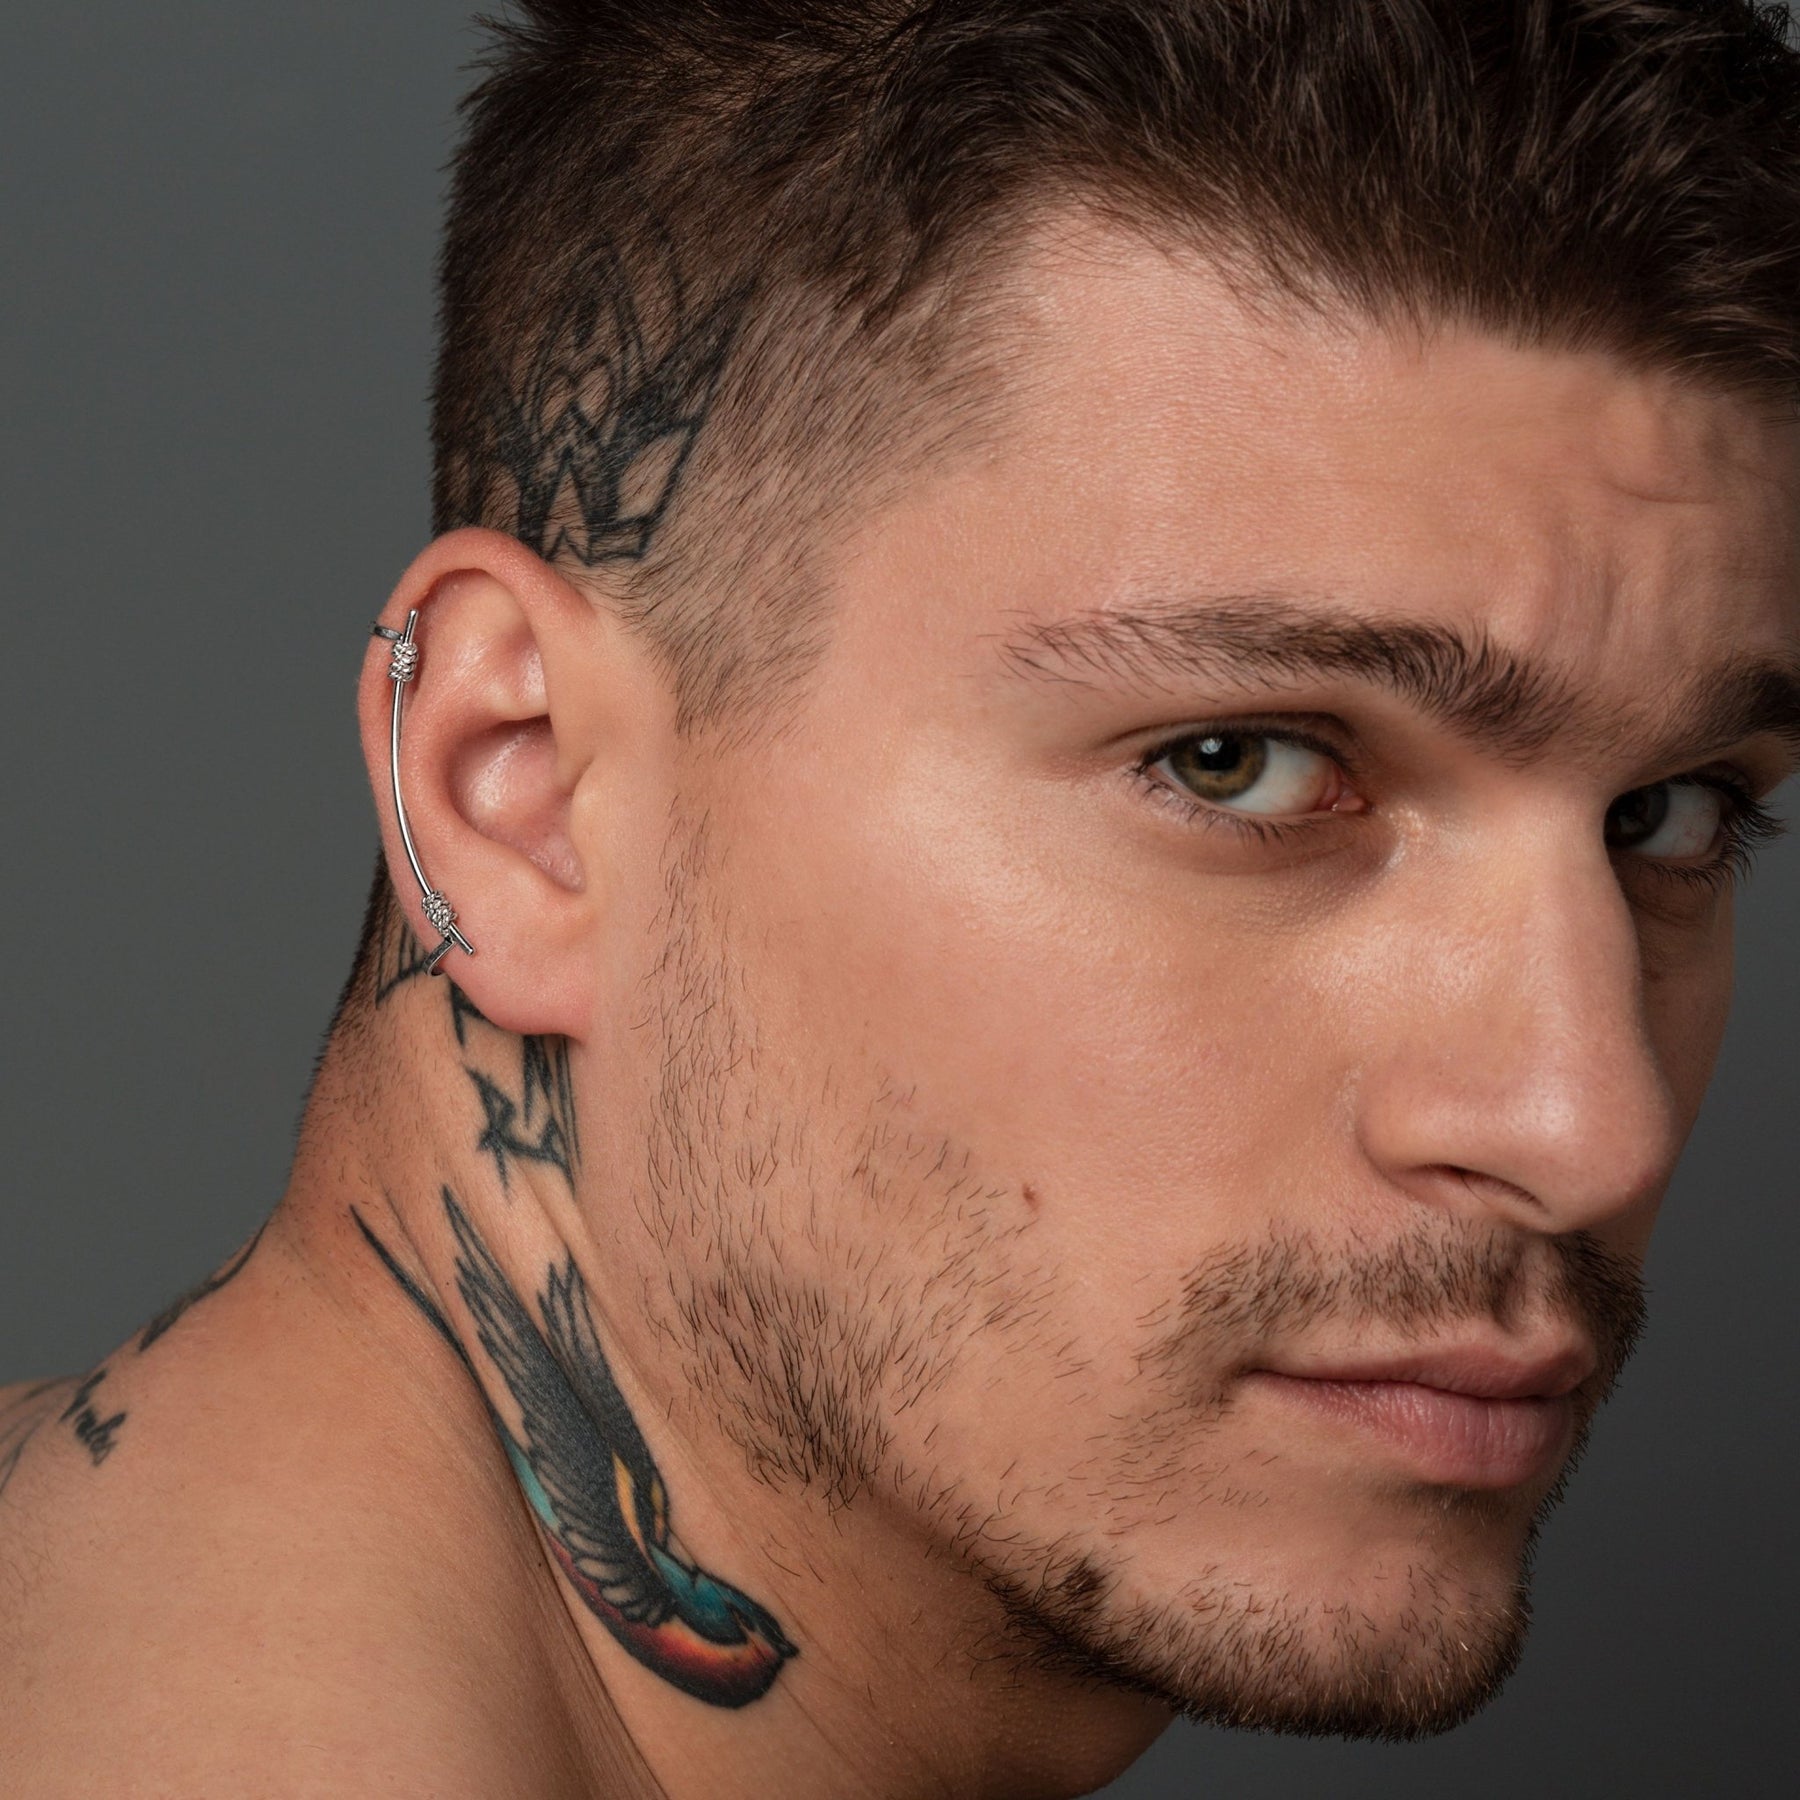 On what type of men do earrings look good on? - Quora